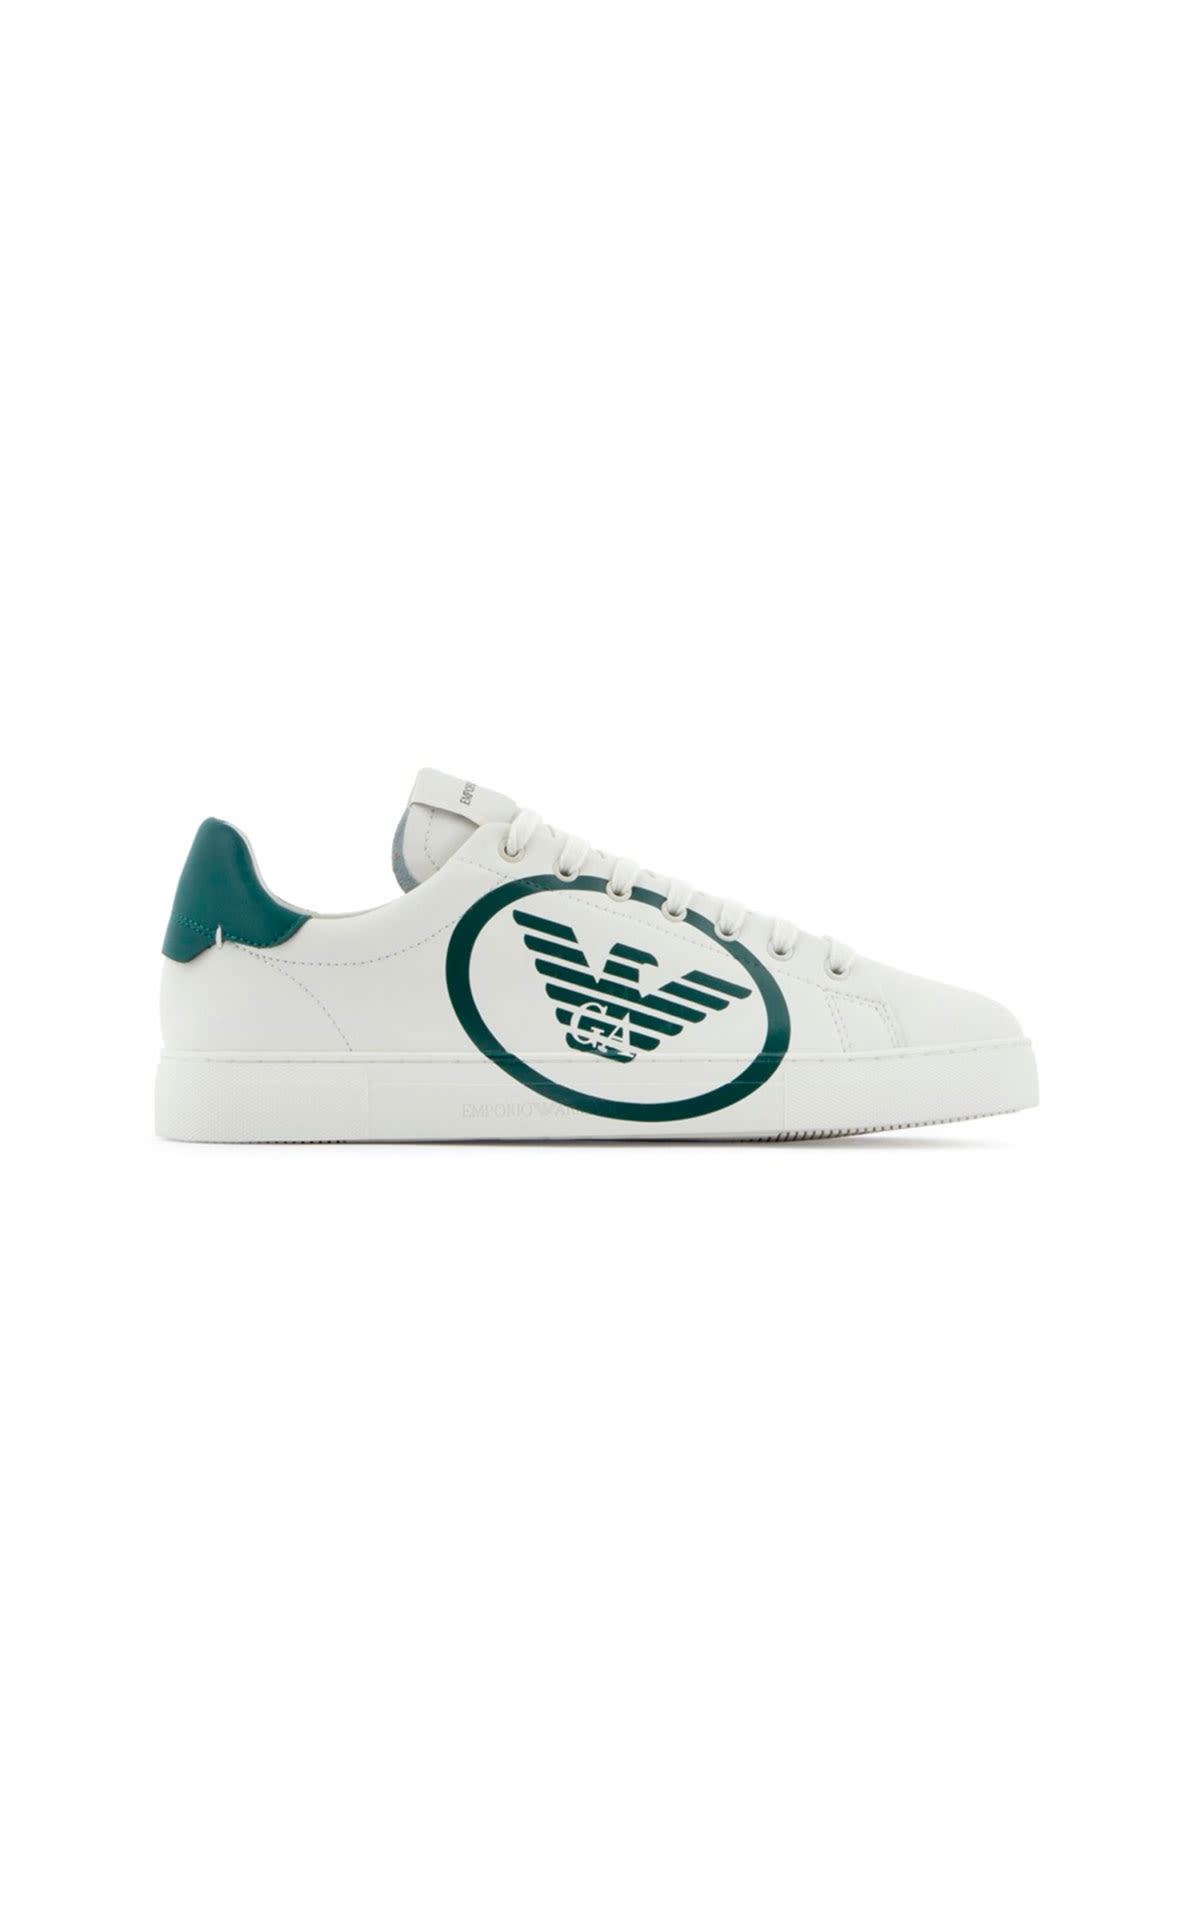 White sneaker with brand logo blazer